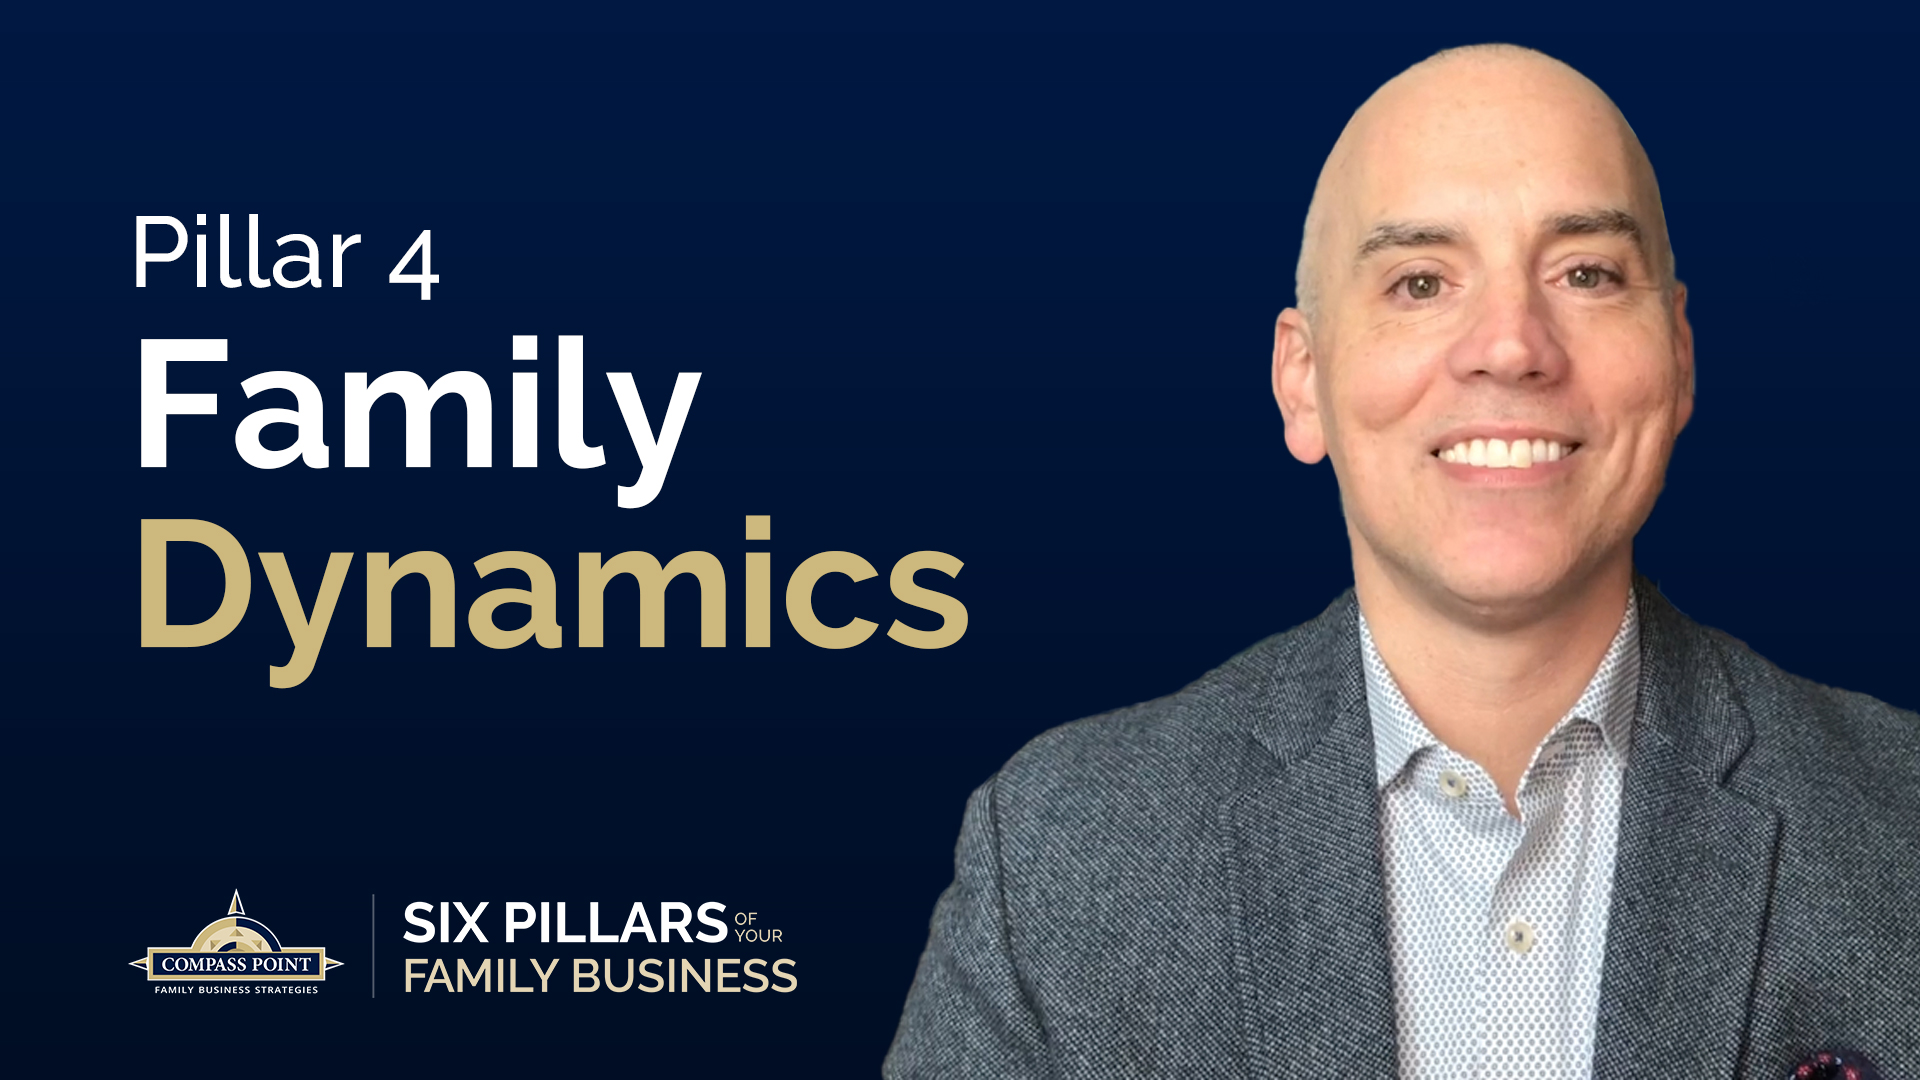 Compass Point Consulting - 6 Pillars Framework - Pillar 4: Family Dynamics/Governance